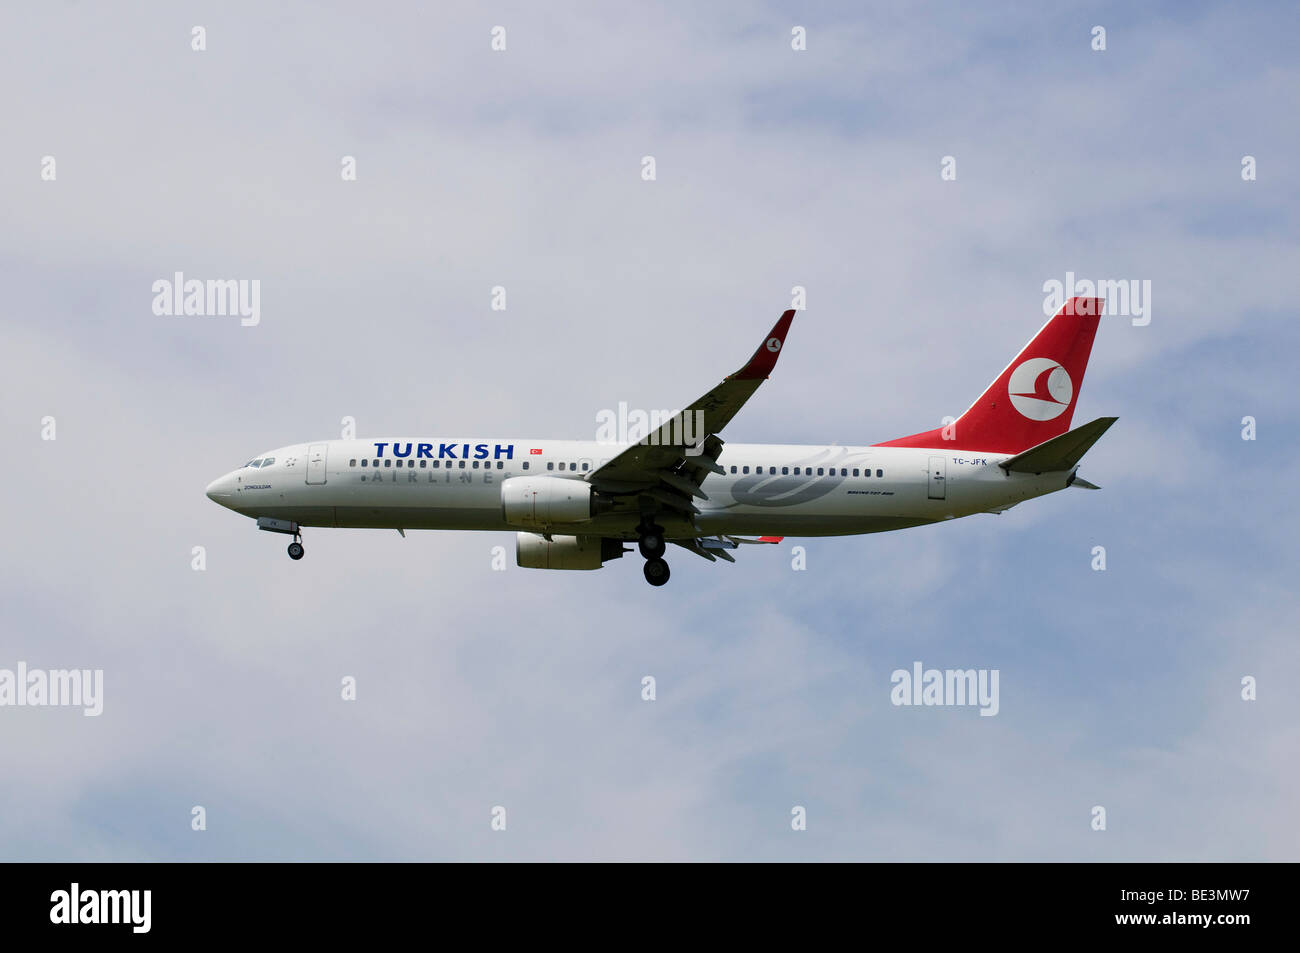 Aeromobili con alette, Turkish Airlines Boeing 737-800/8F2, ID: TC-JFK, parzialmente stato turco compagnia aerea, Tuerk Hava Yollari AO, T Foto Stock